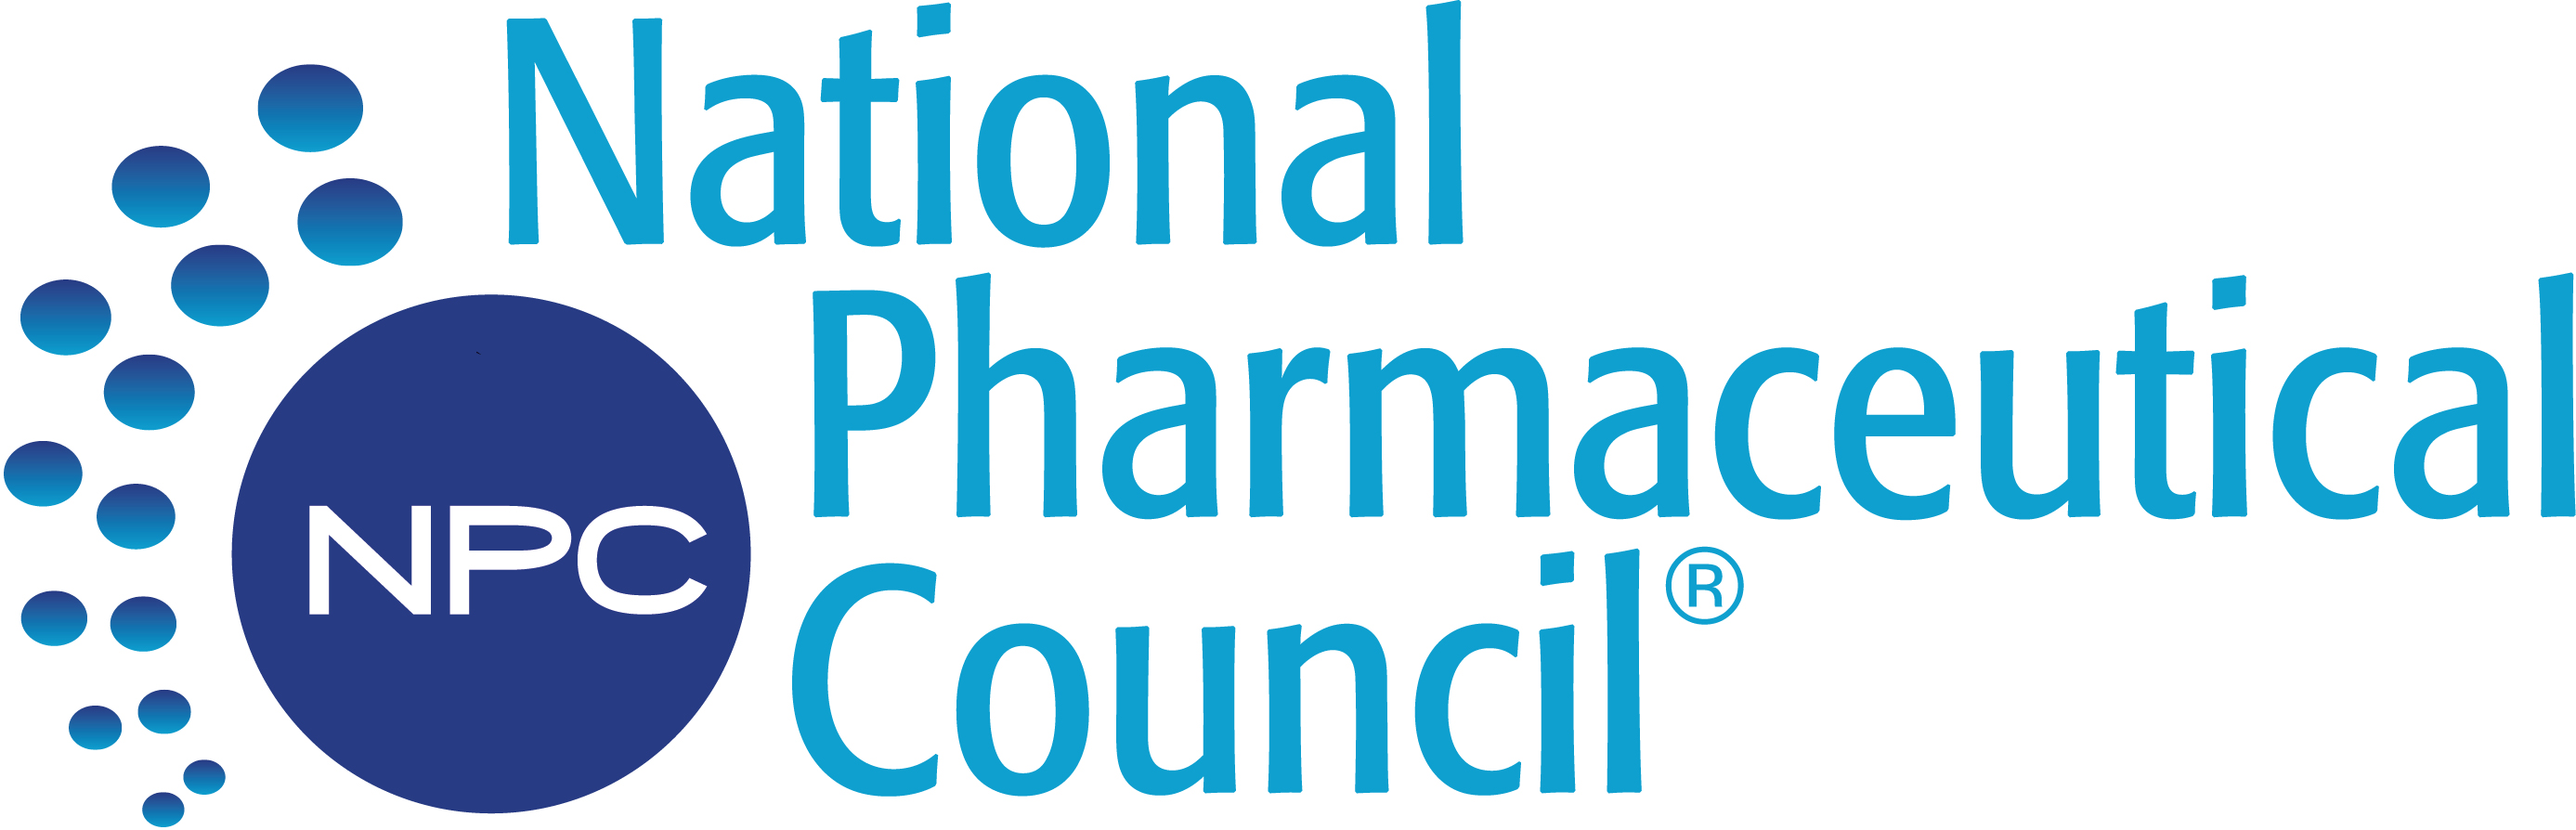 national_pharmaceutical_council_logo